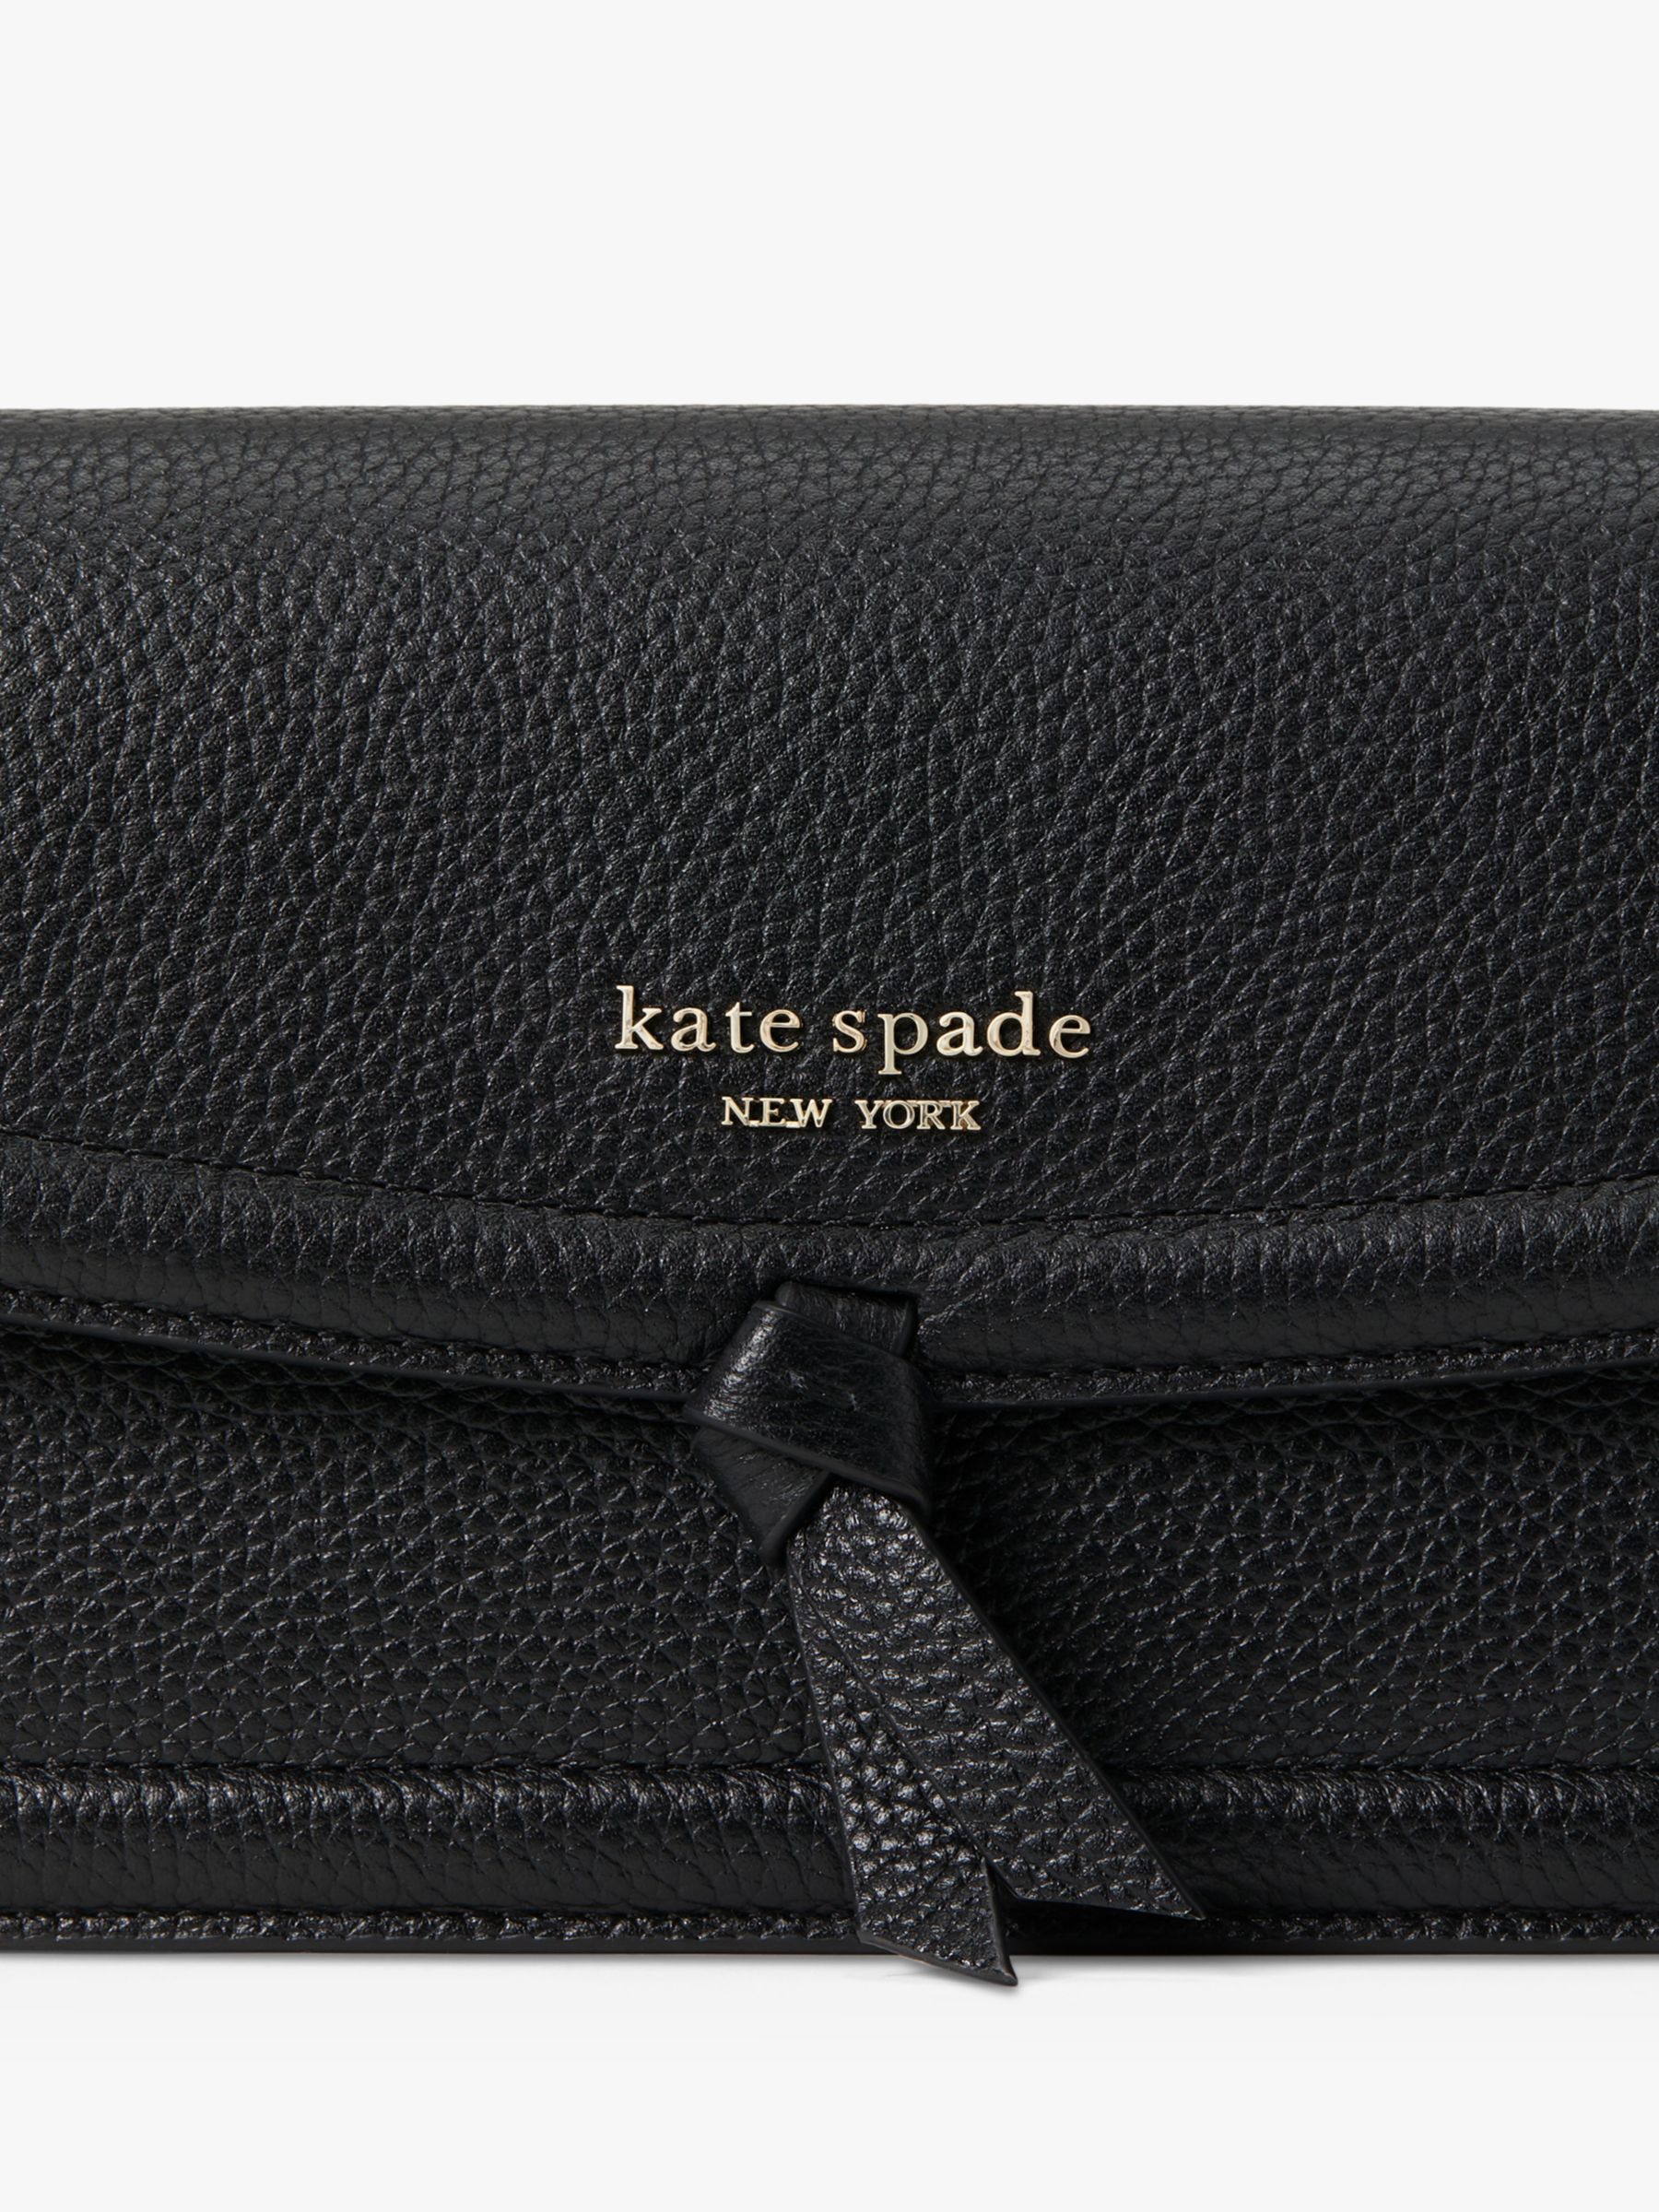 kate spade new york Knott Leather Chain Cross Body Bag, Black at John Lewis  & Partners